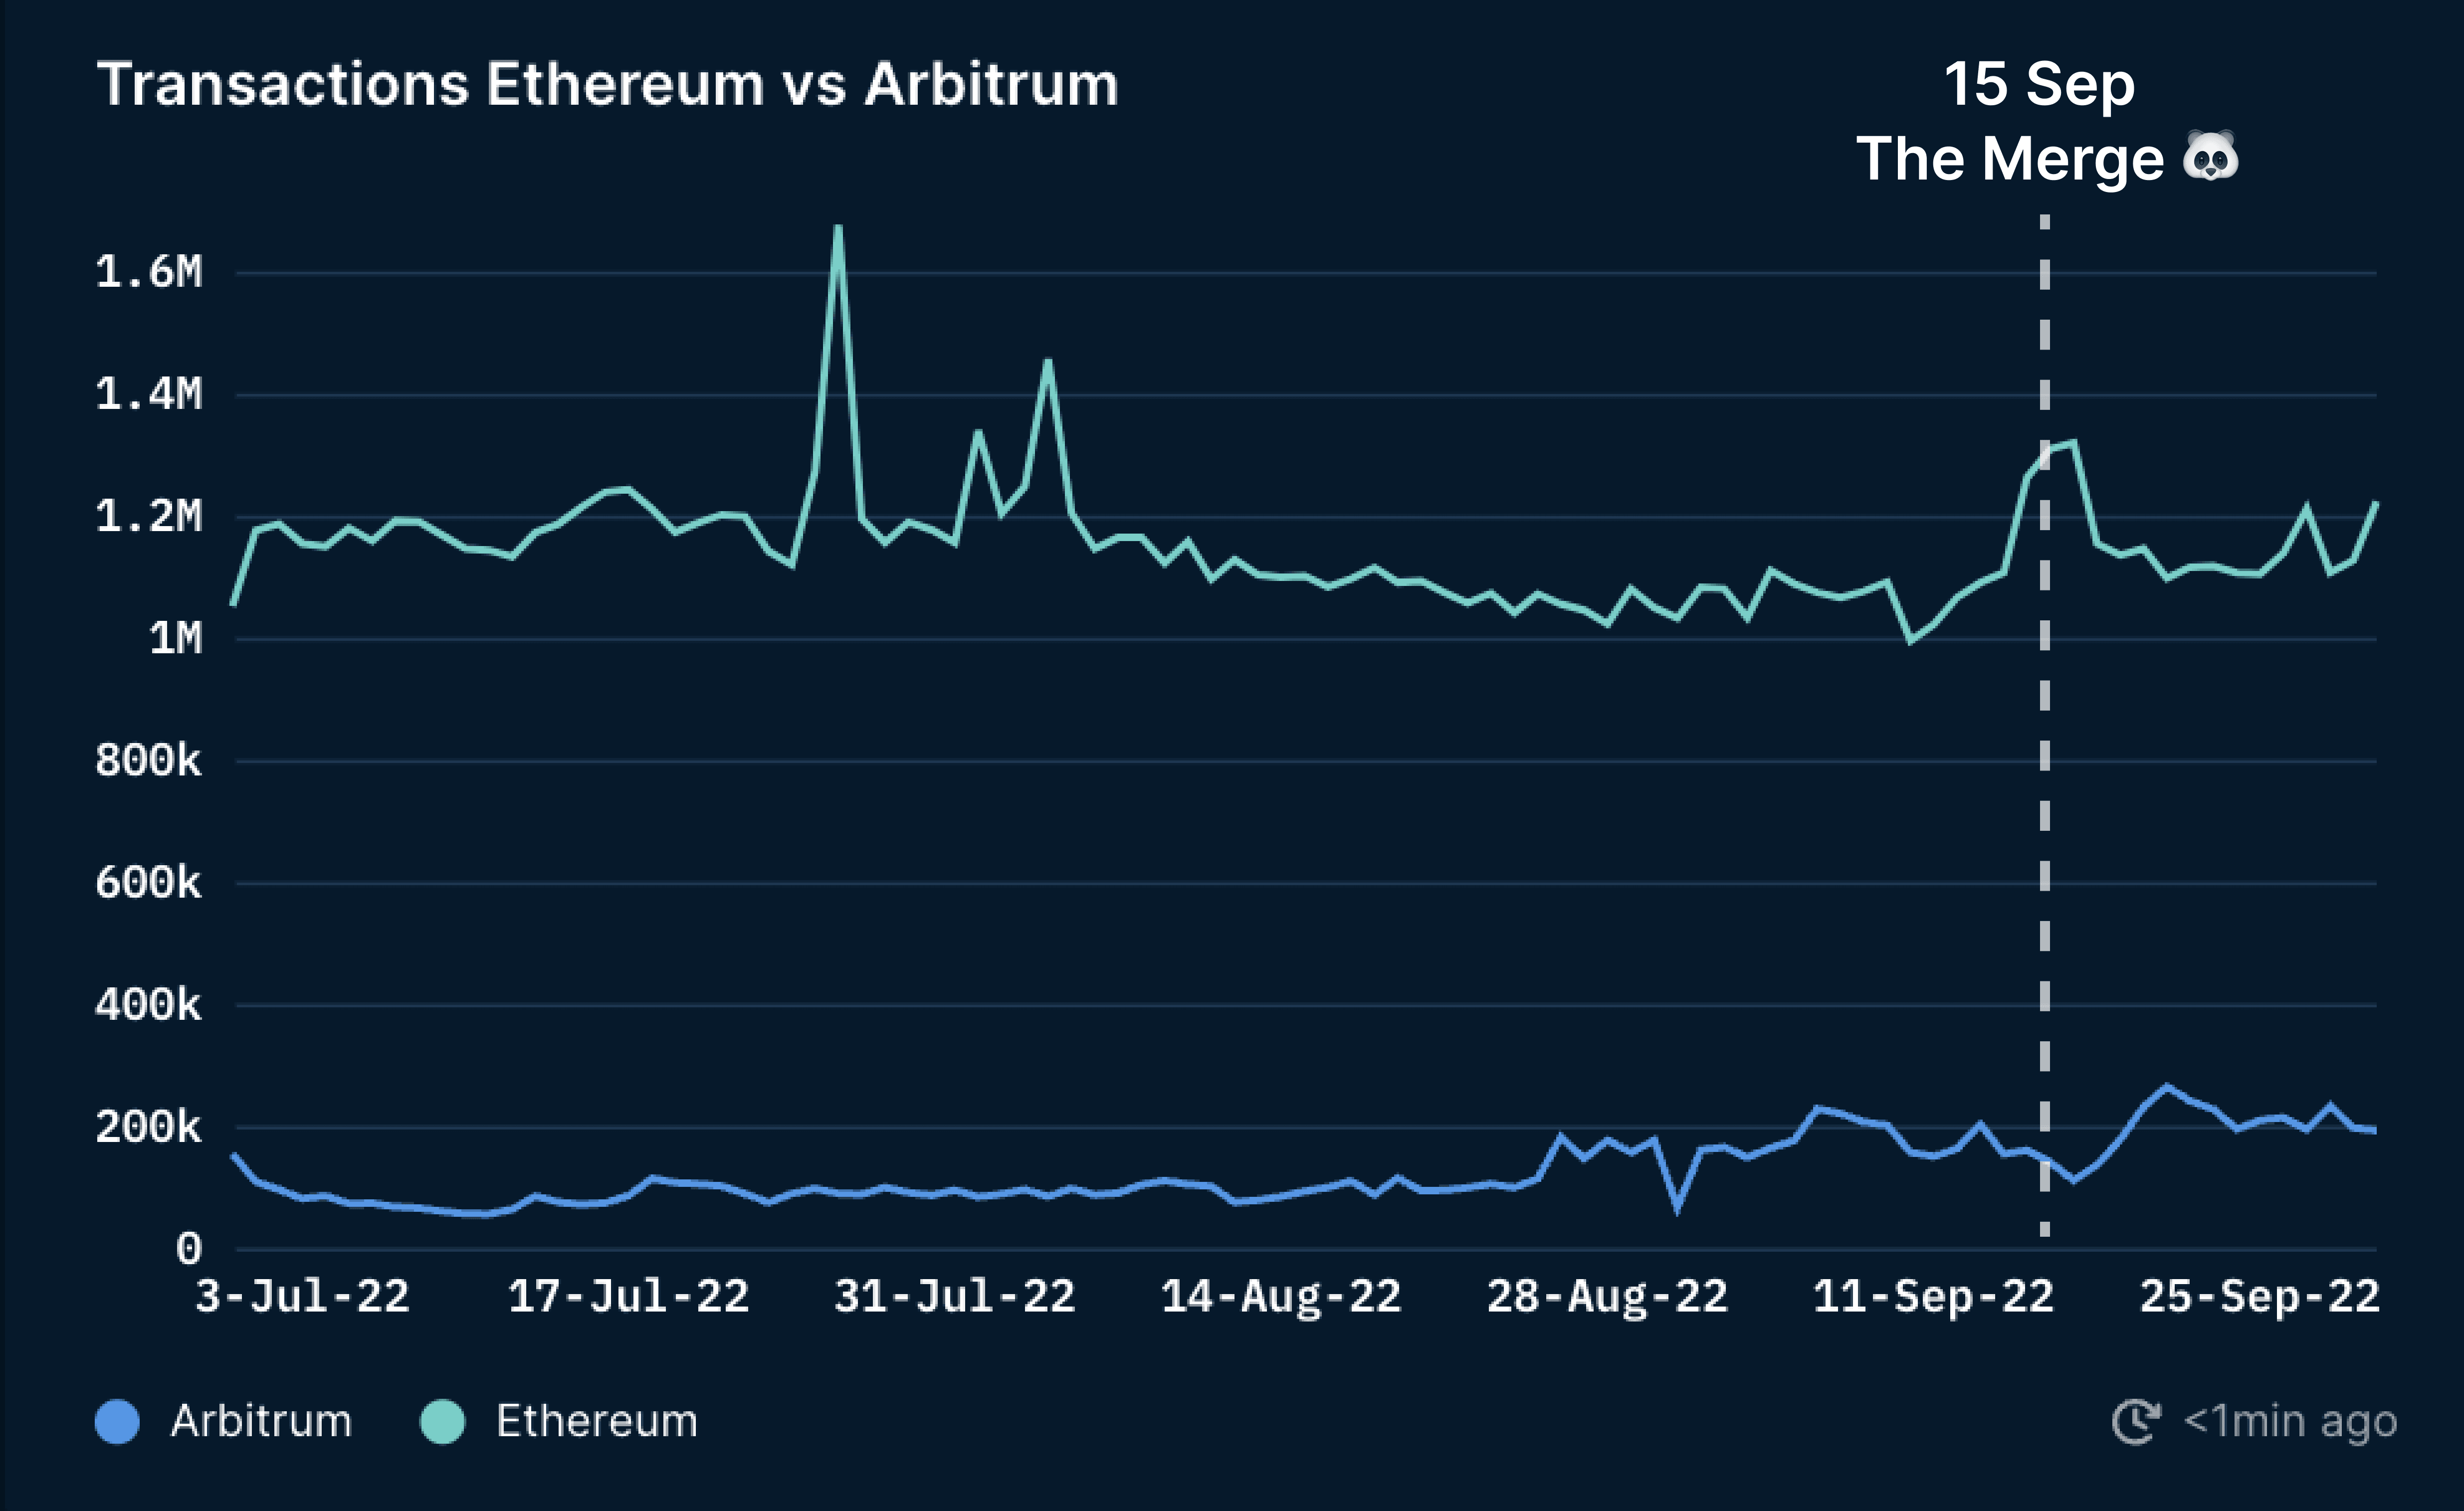 Daily Transaction on Ethereum vs Arbitrum